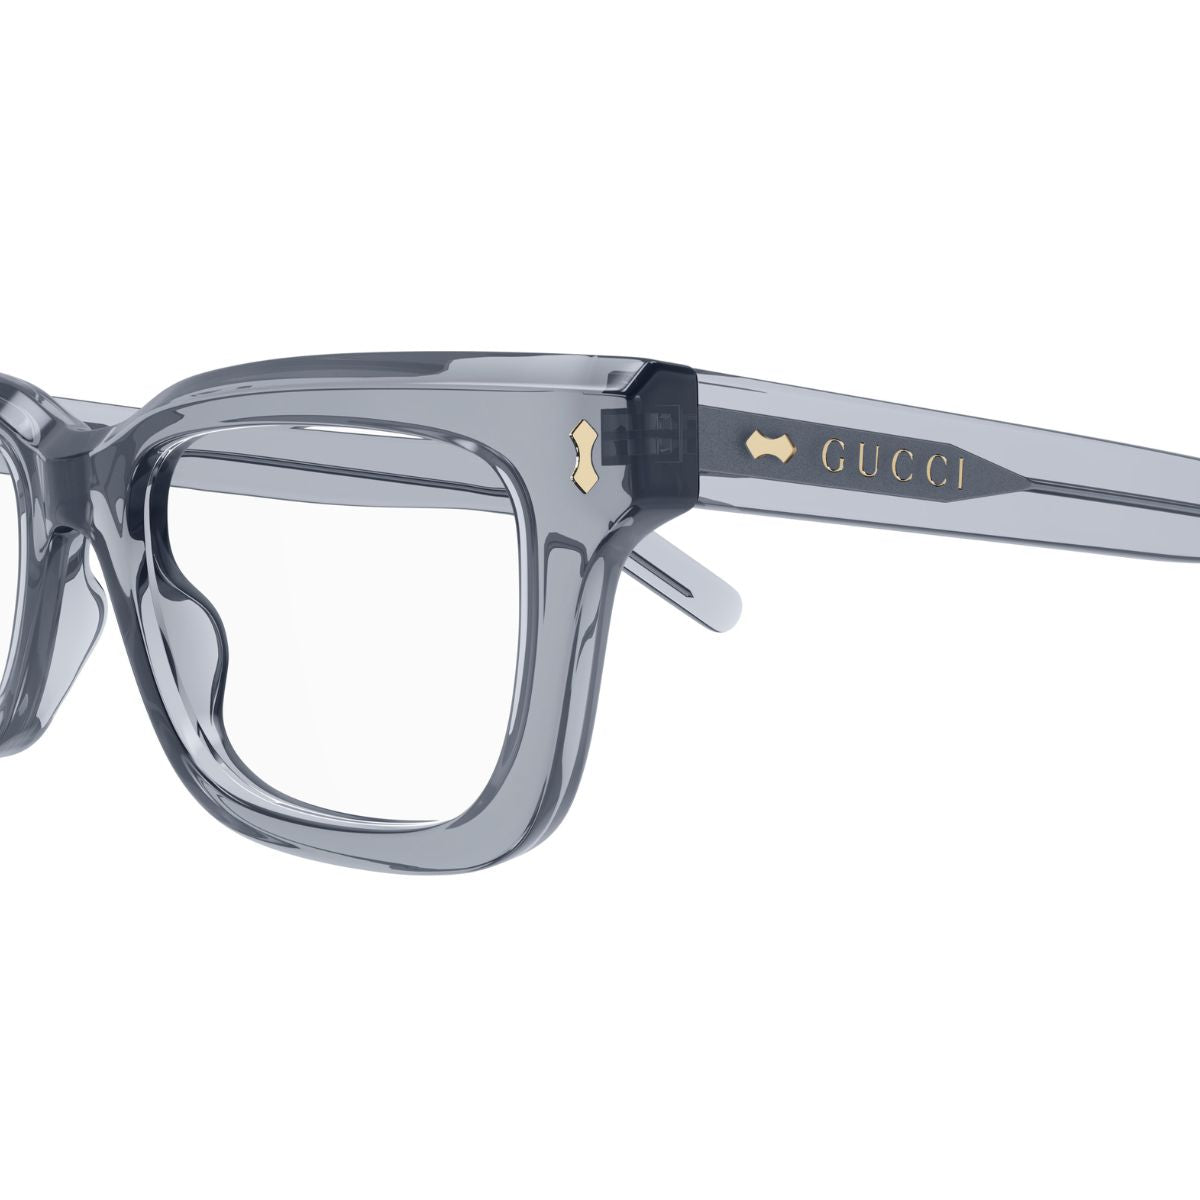 "Gucci GG1522O 008 eyesight glasses frame for women's at optorium"